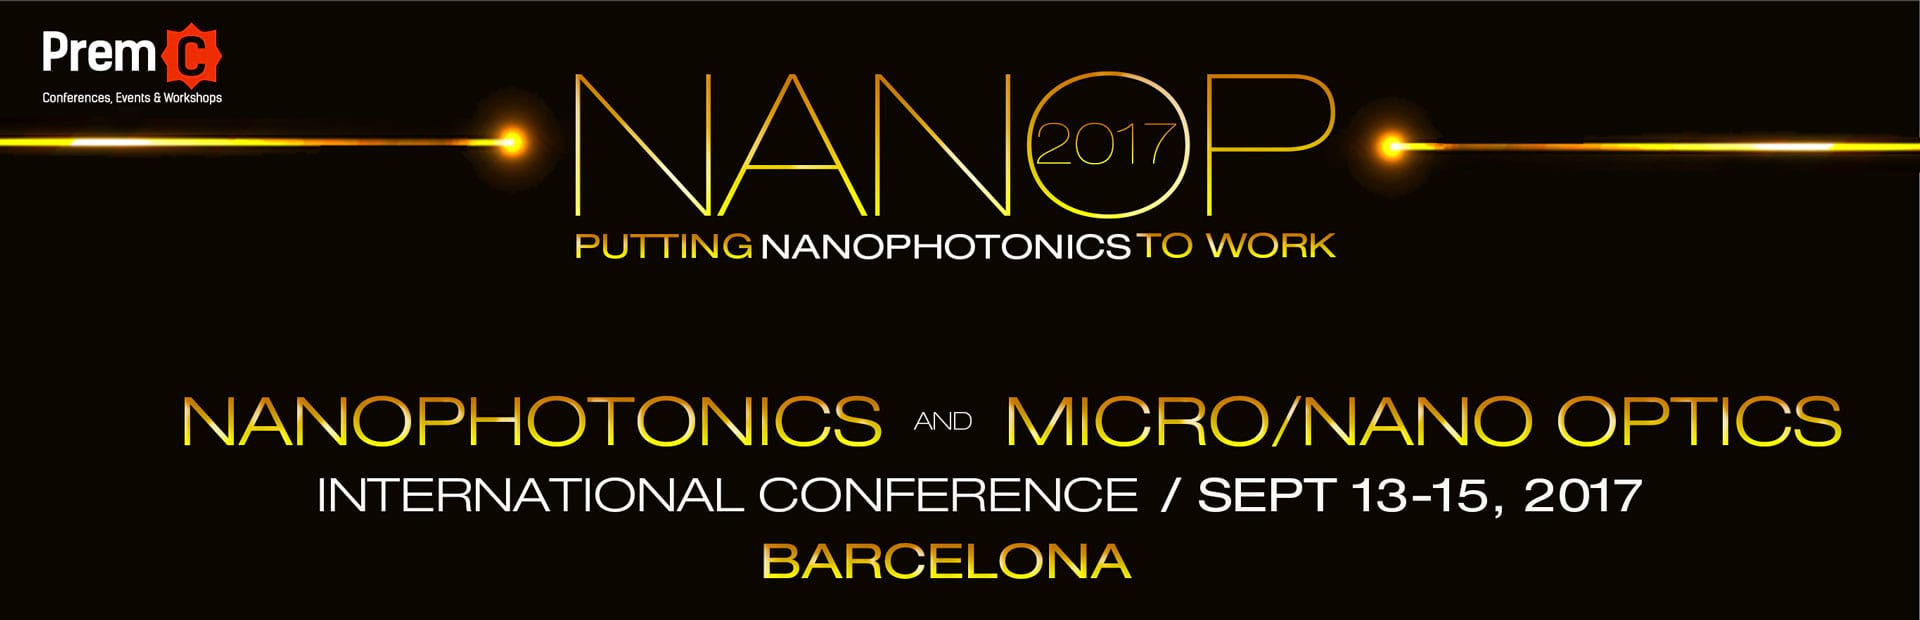 Nanophotonics and Micro/Nano Optics International Conference - NANOP 2017